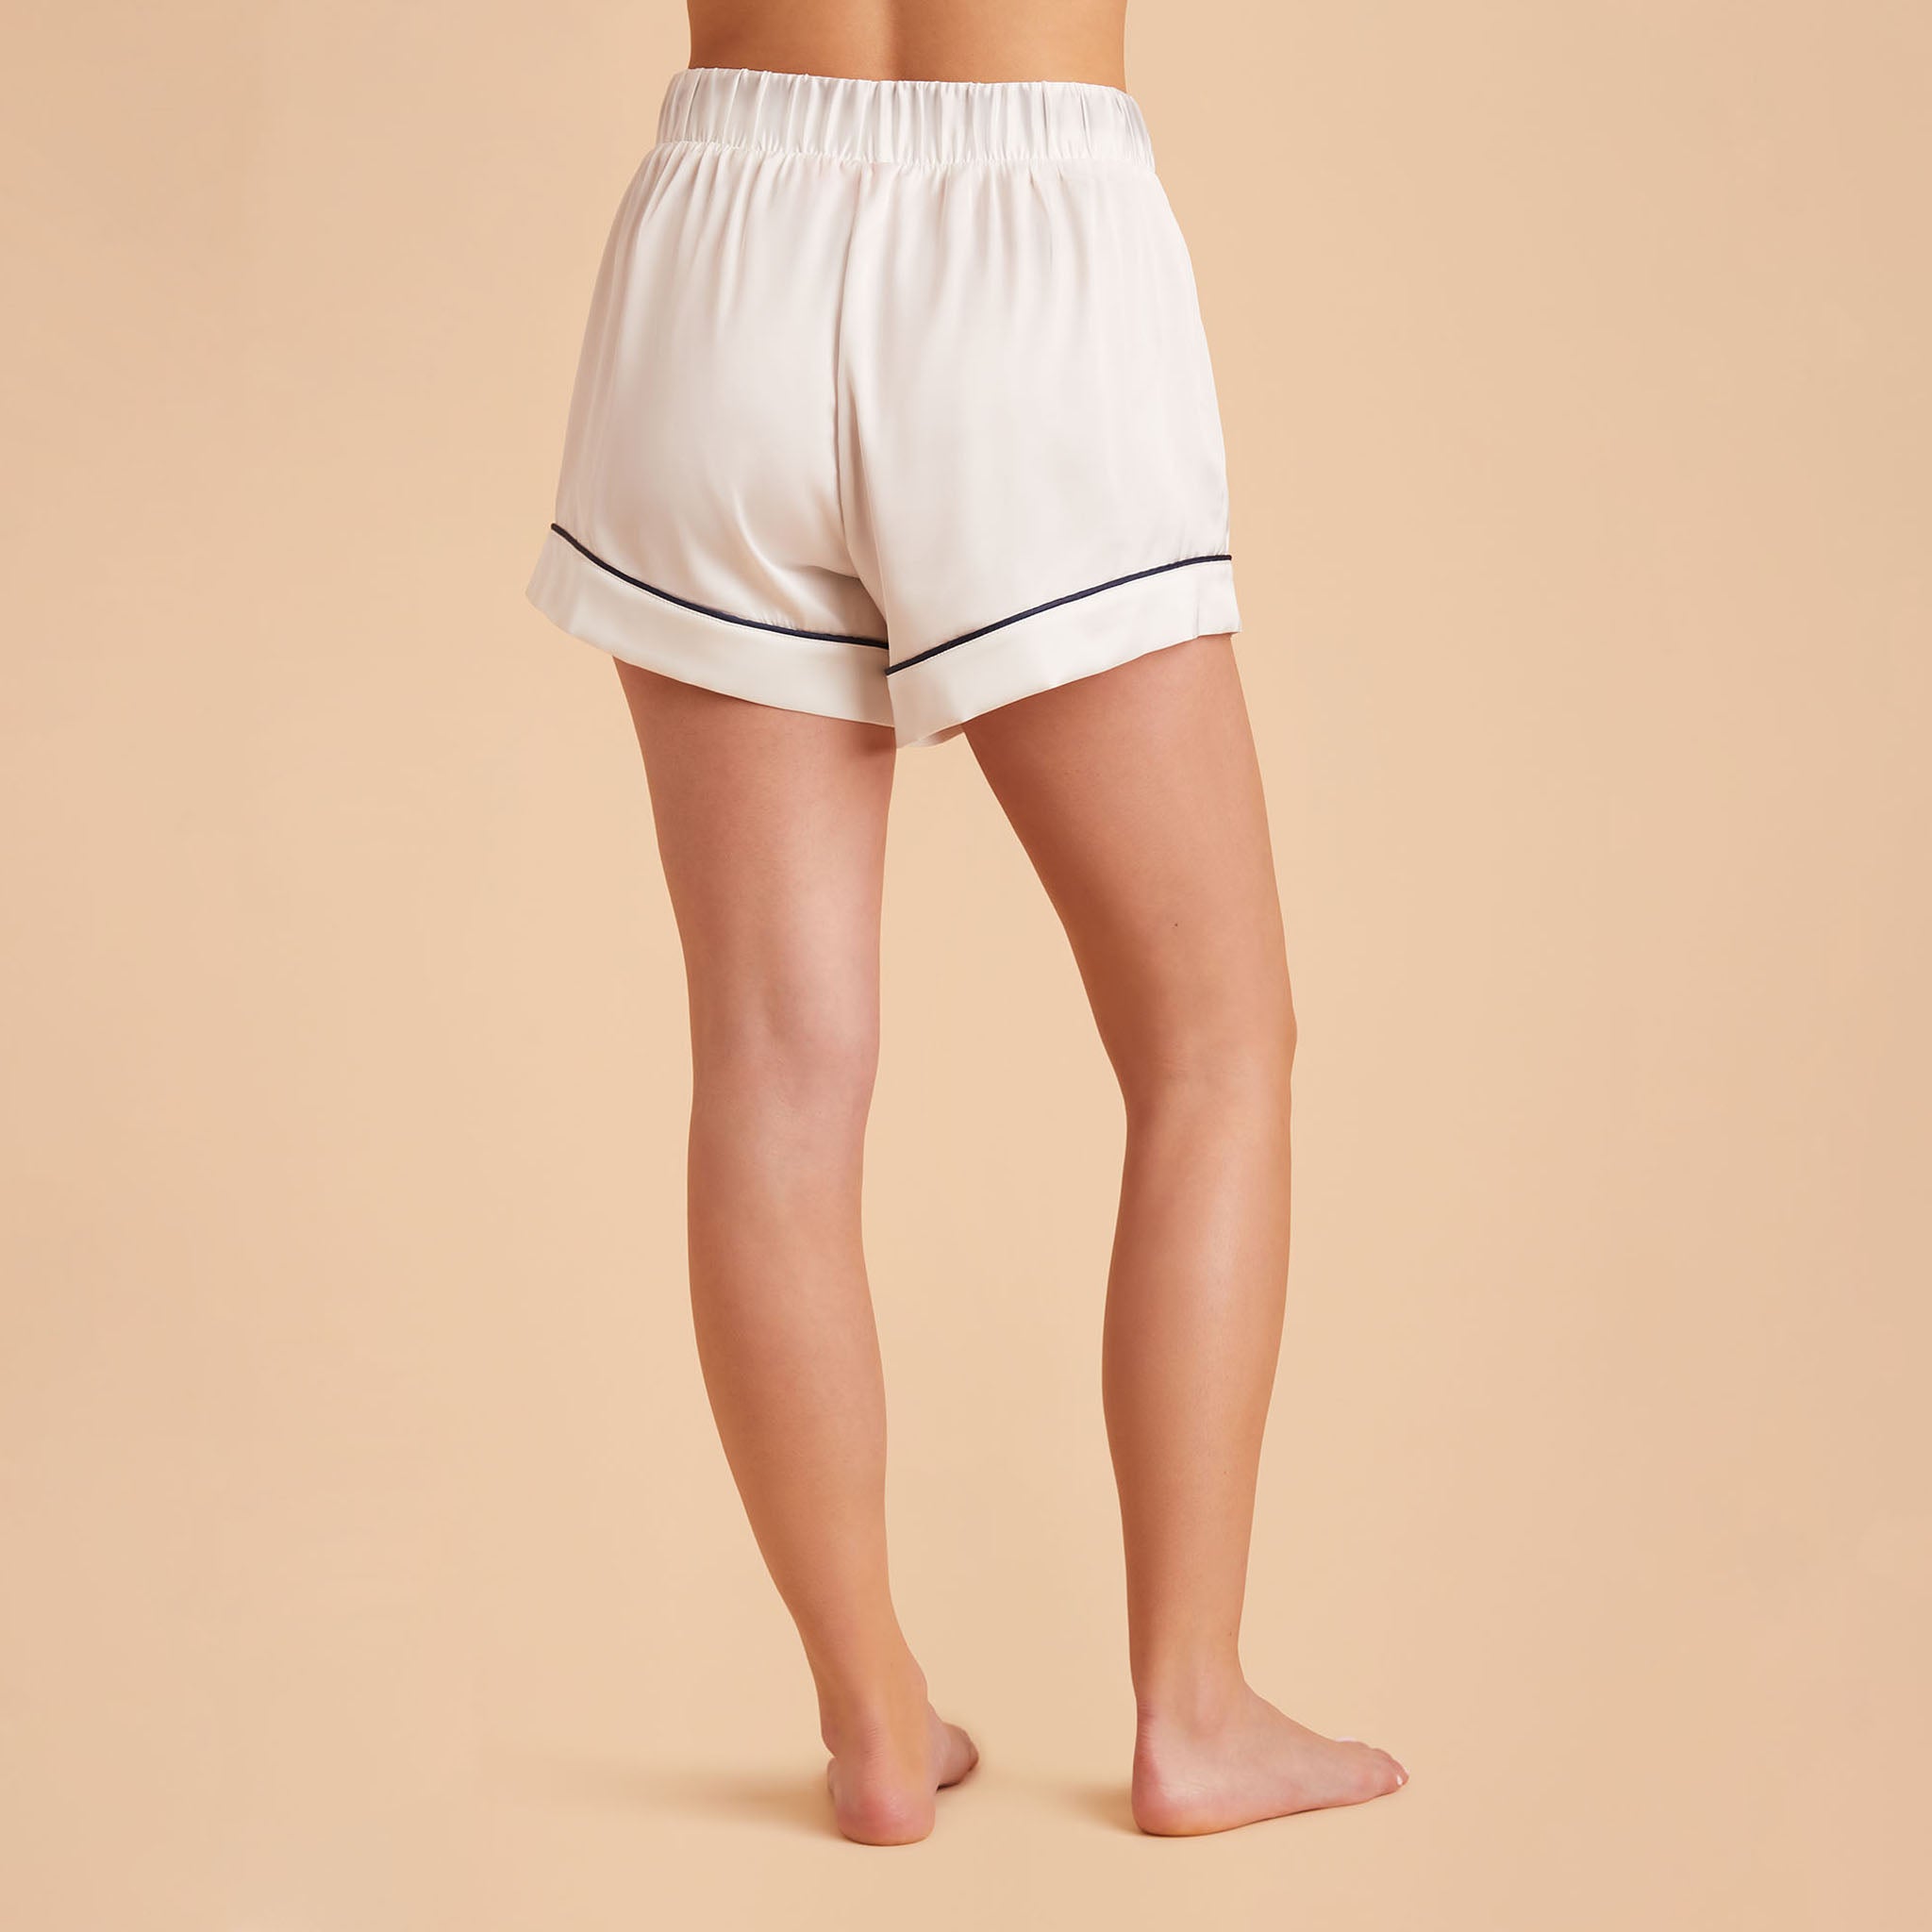 Jonny Satin Shorts Bridesmaid Pajamas With navy Piping in ivory, back view